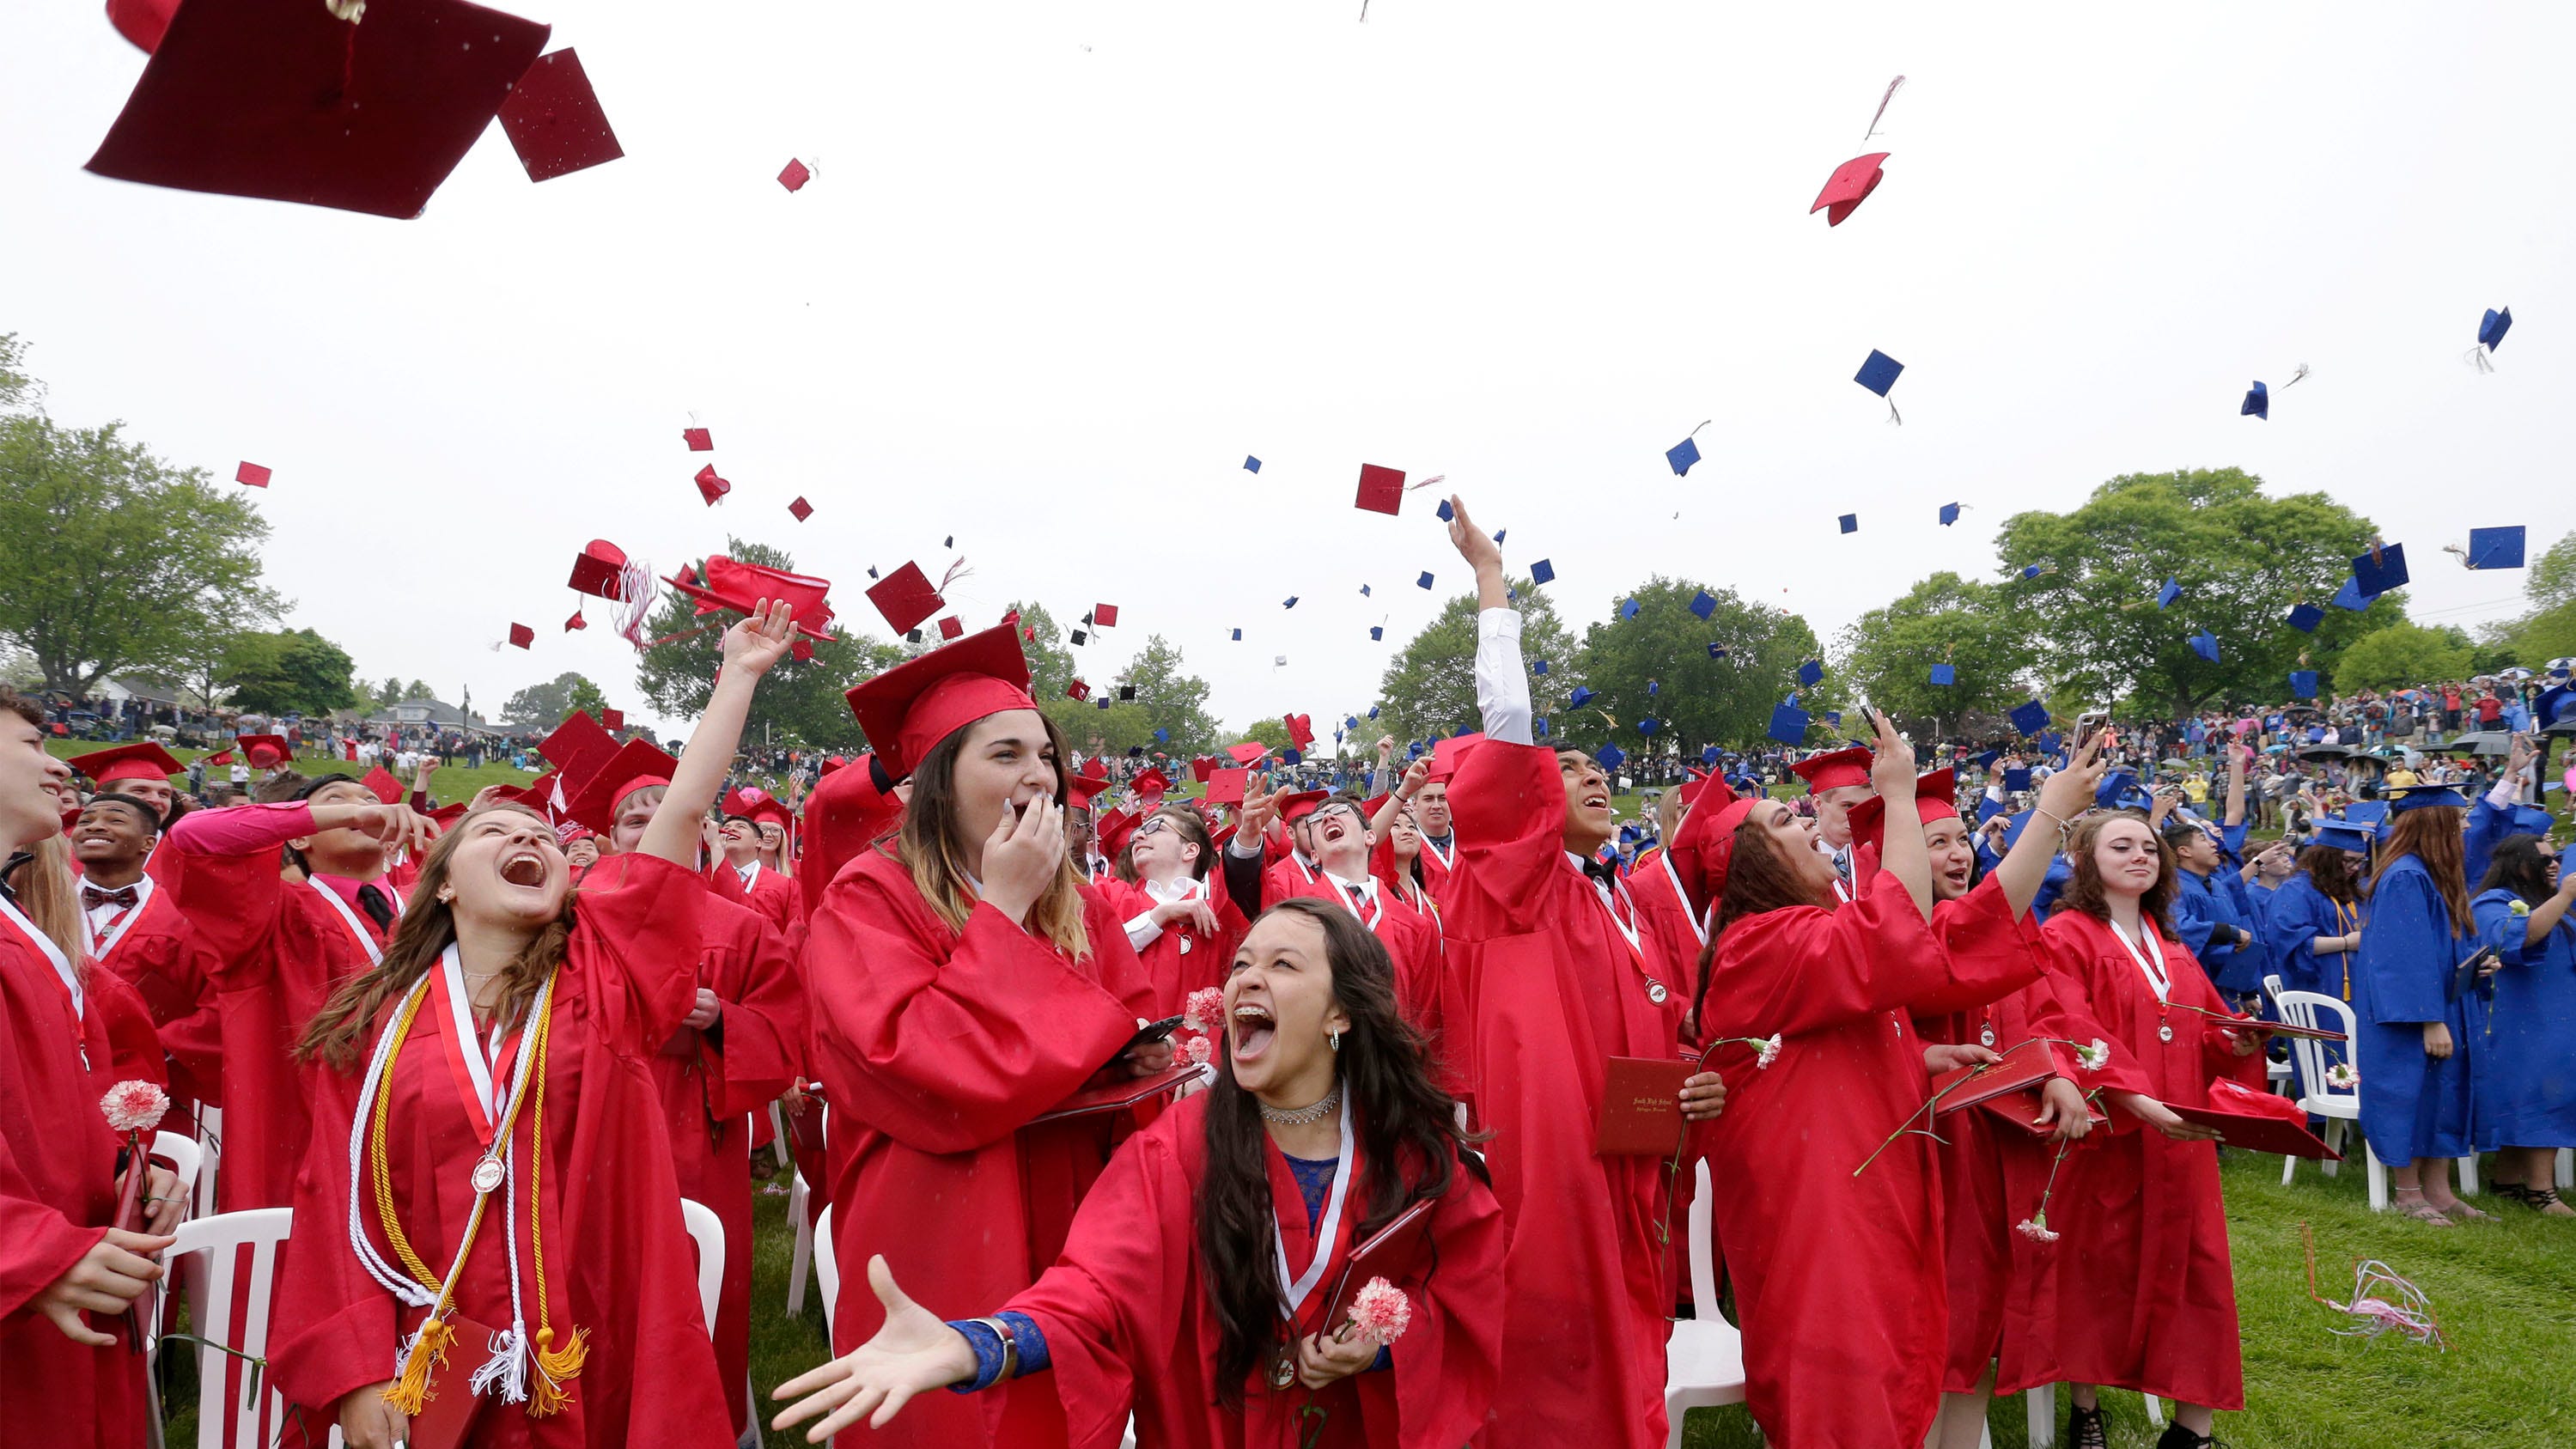 Sheboygan Area School District to hold inperson graduation ceremonies